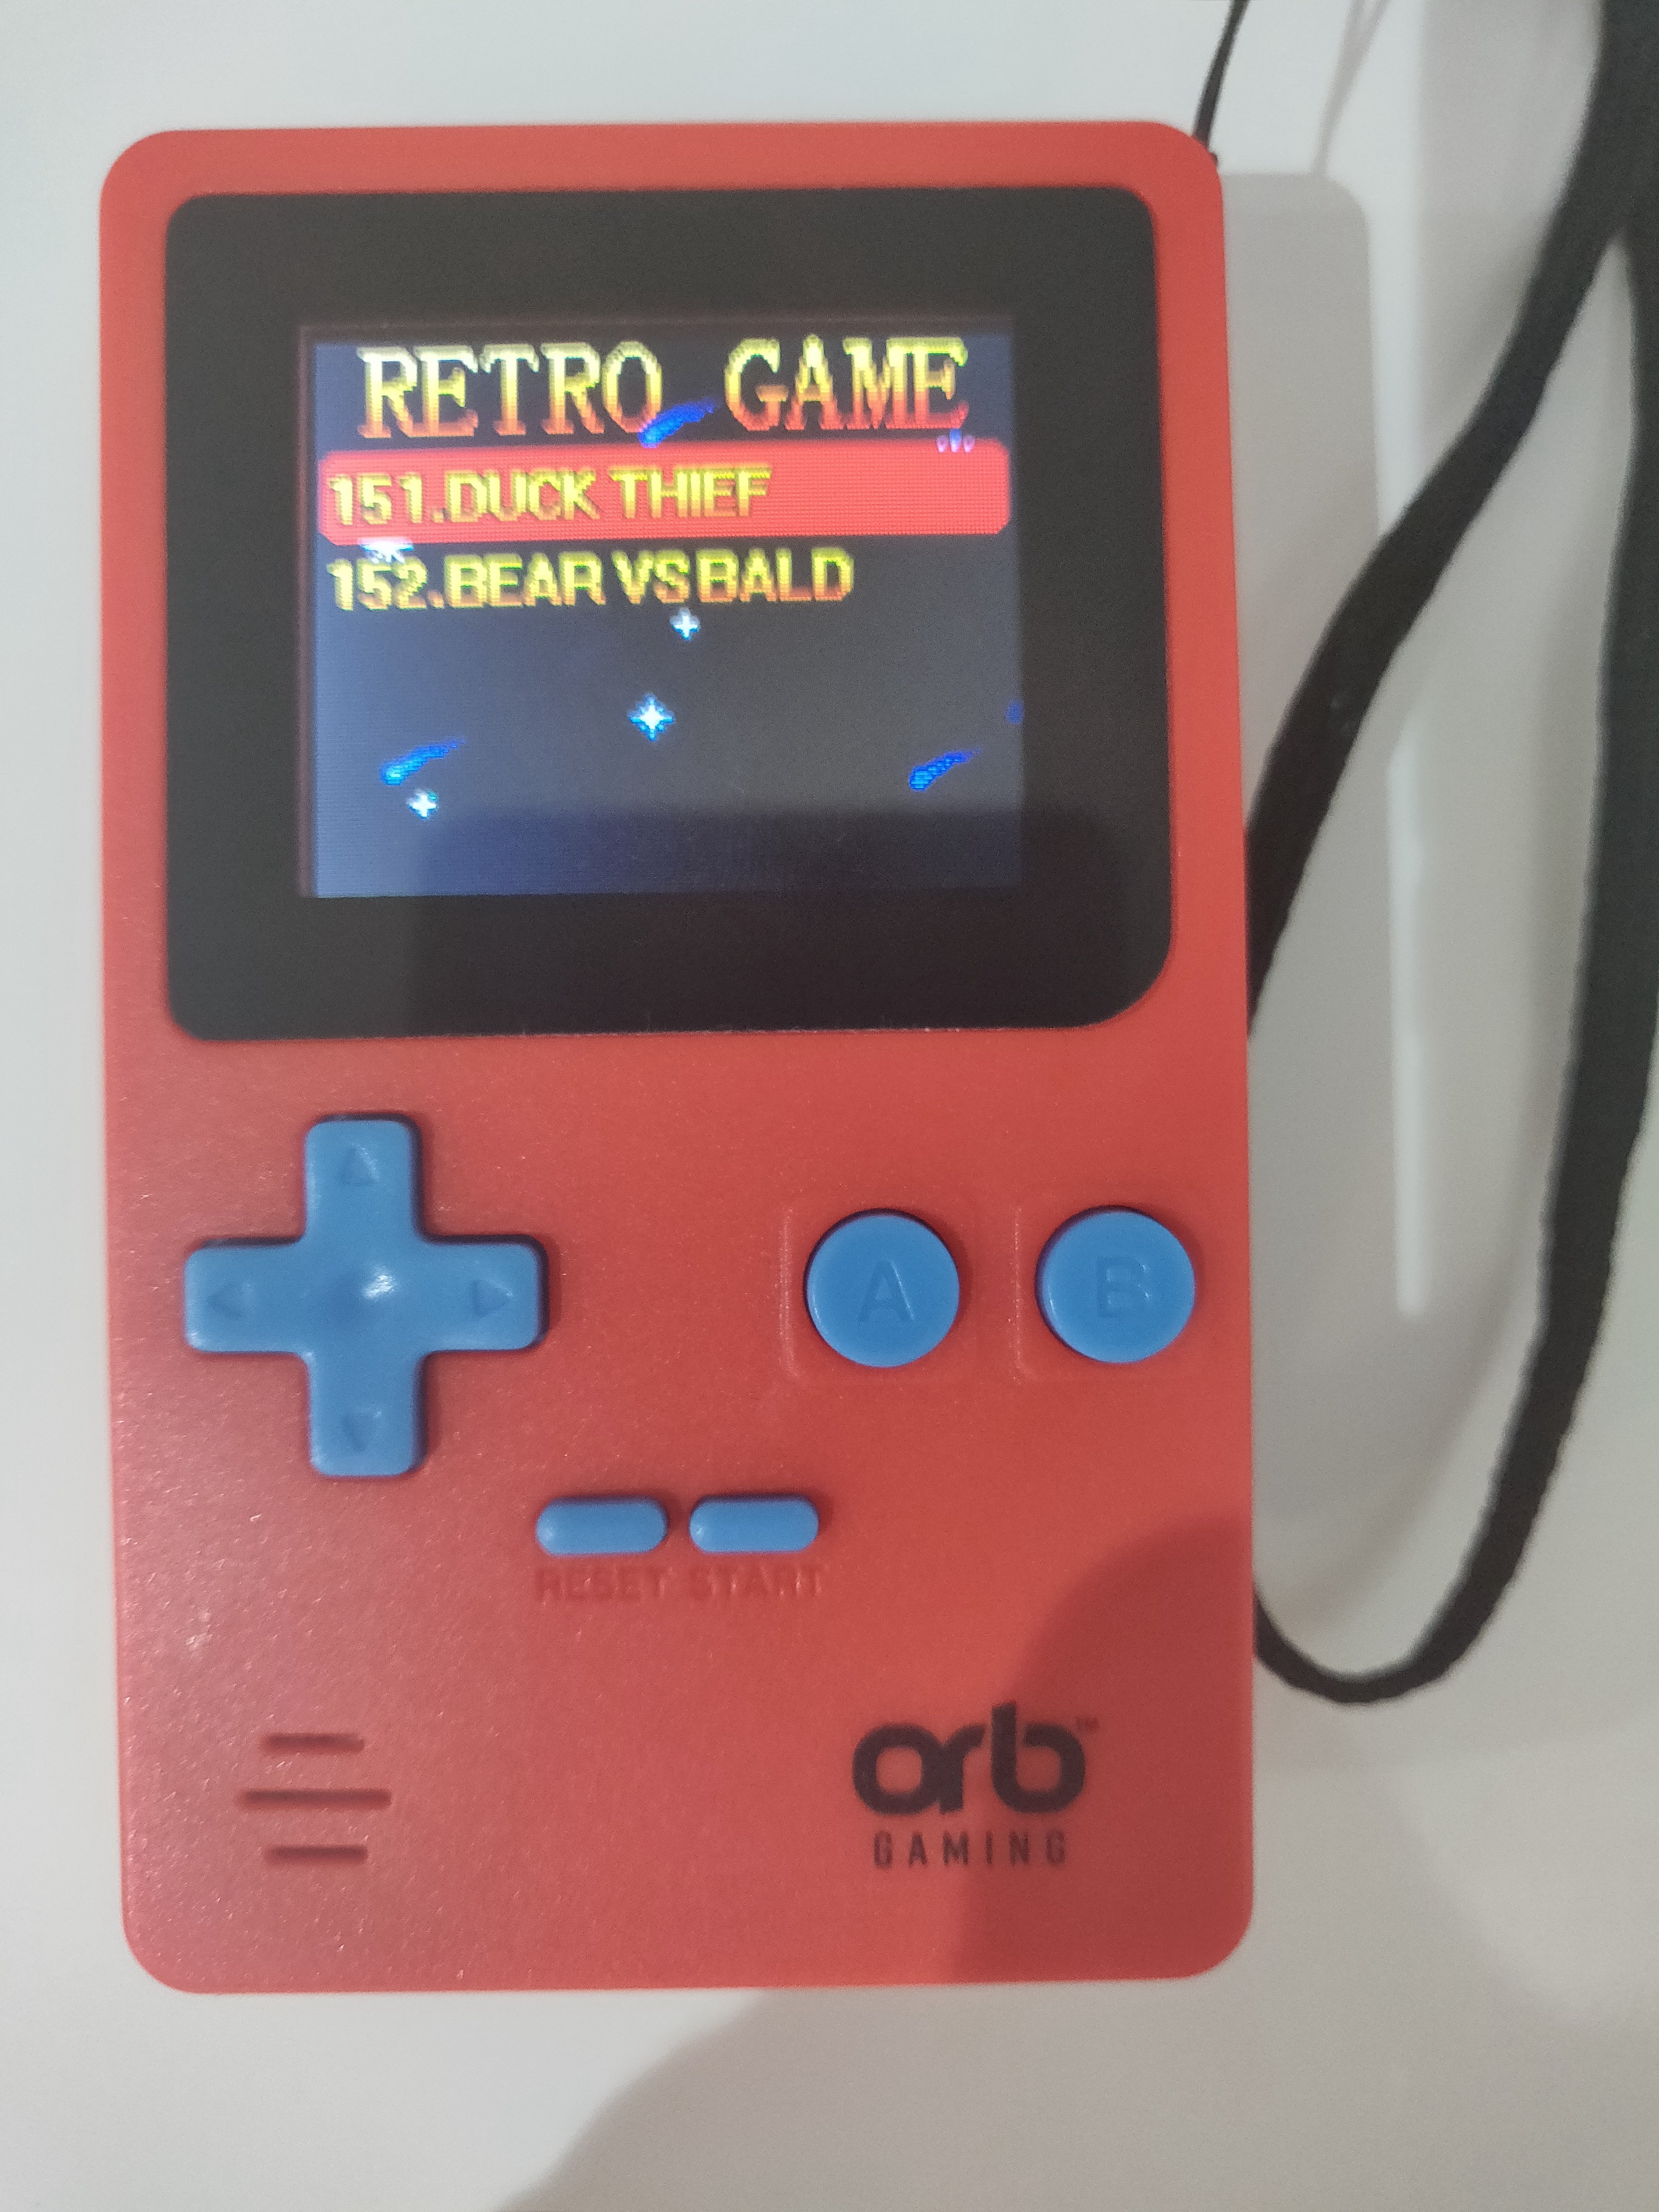 orb gaming retro console